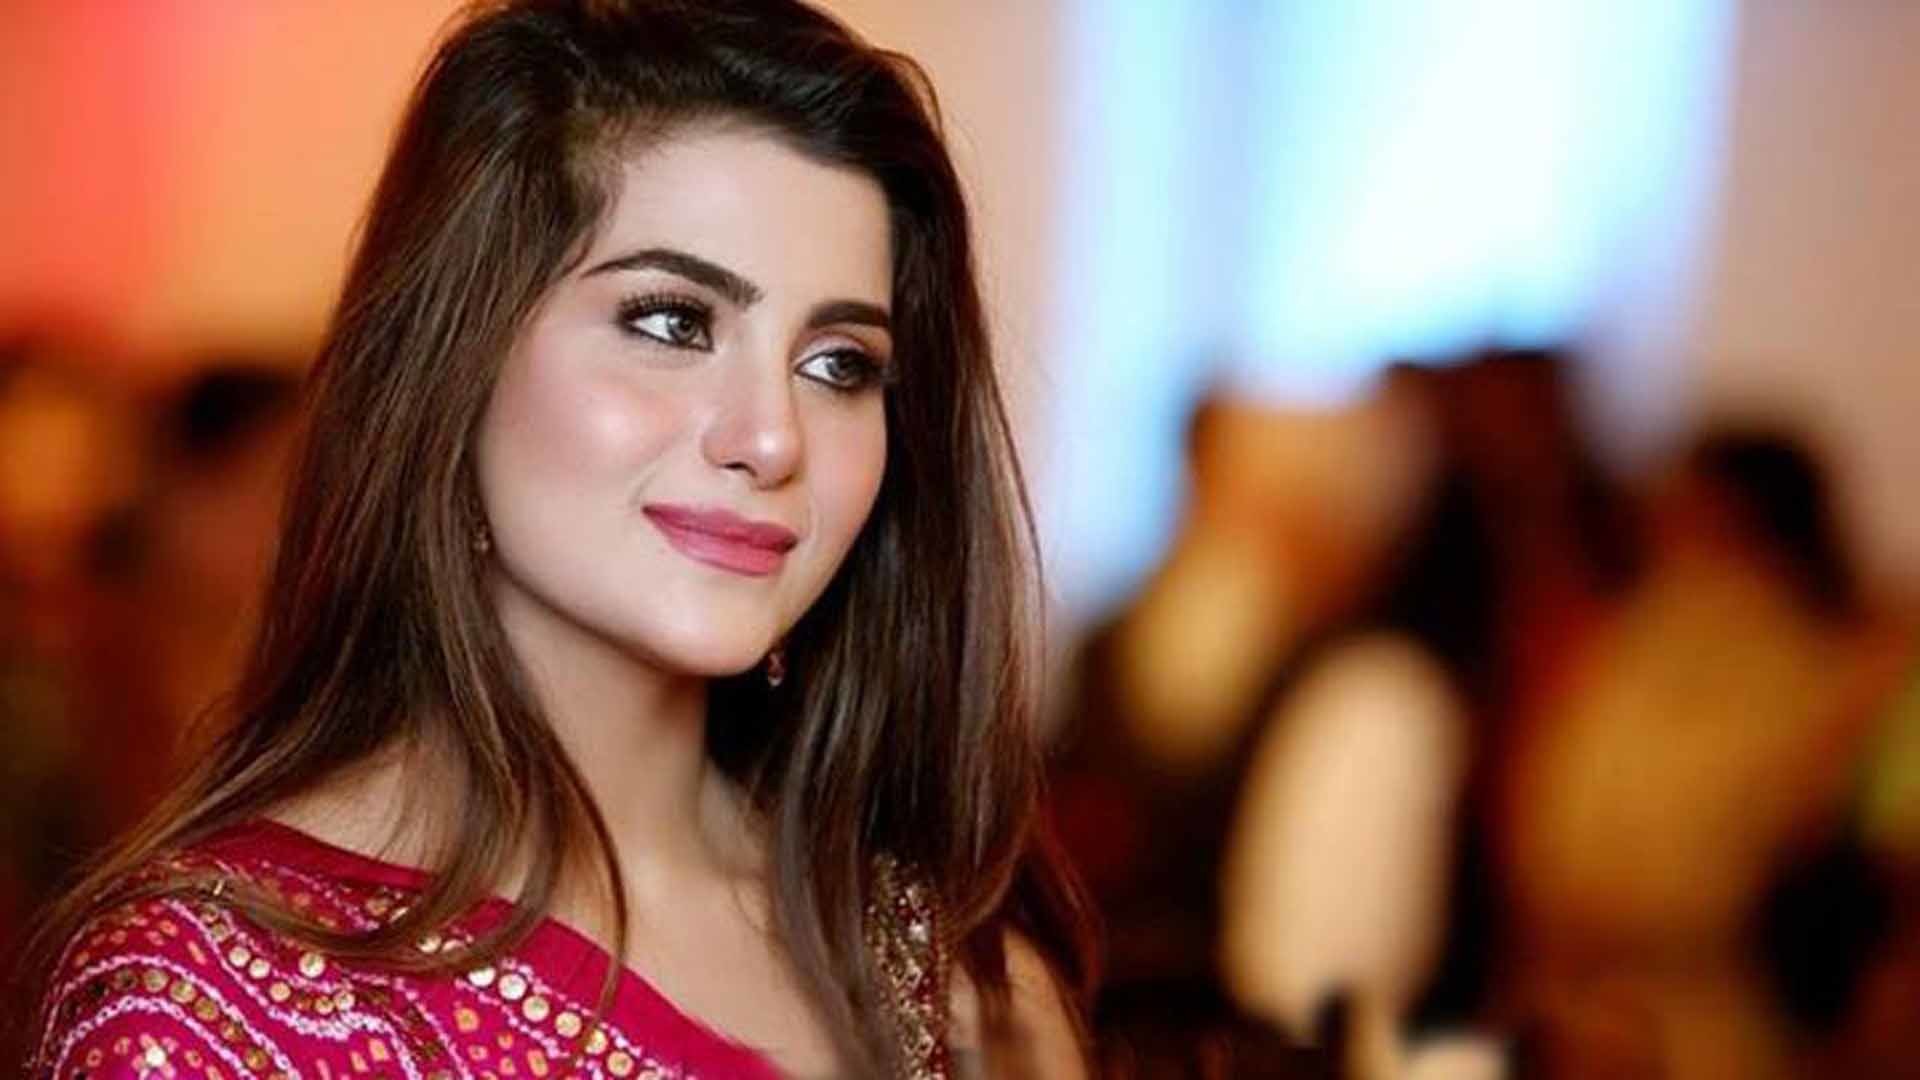 pakistani actress wallpaper,hair,skin,eyebrow,beauty,lip